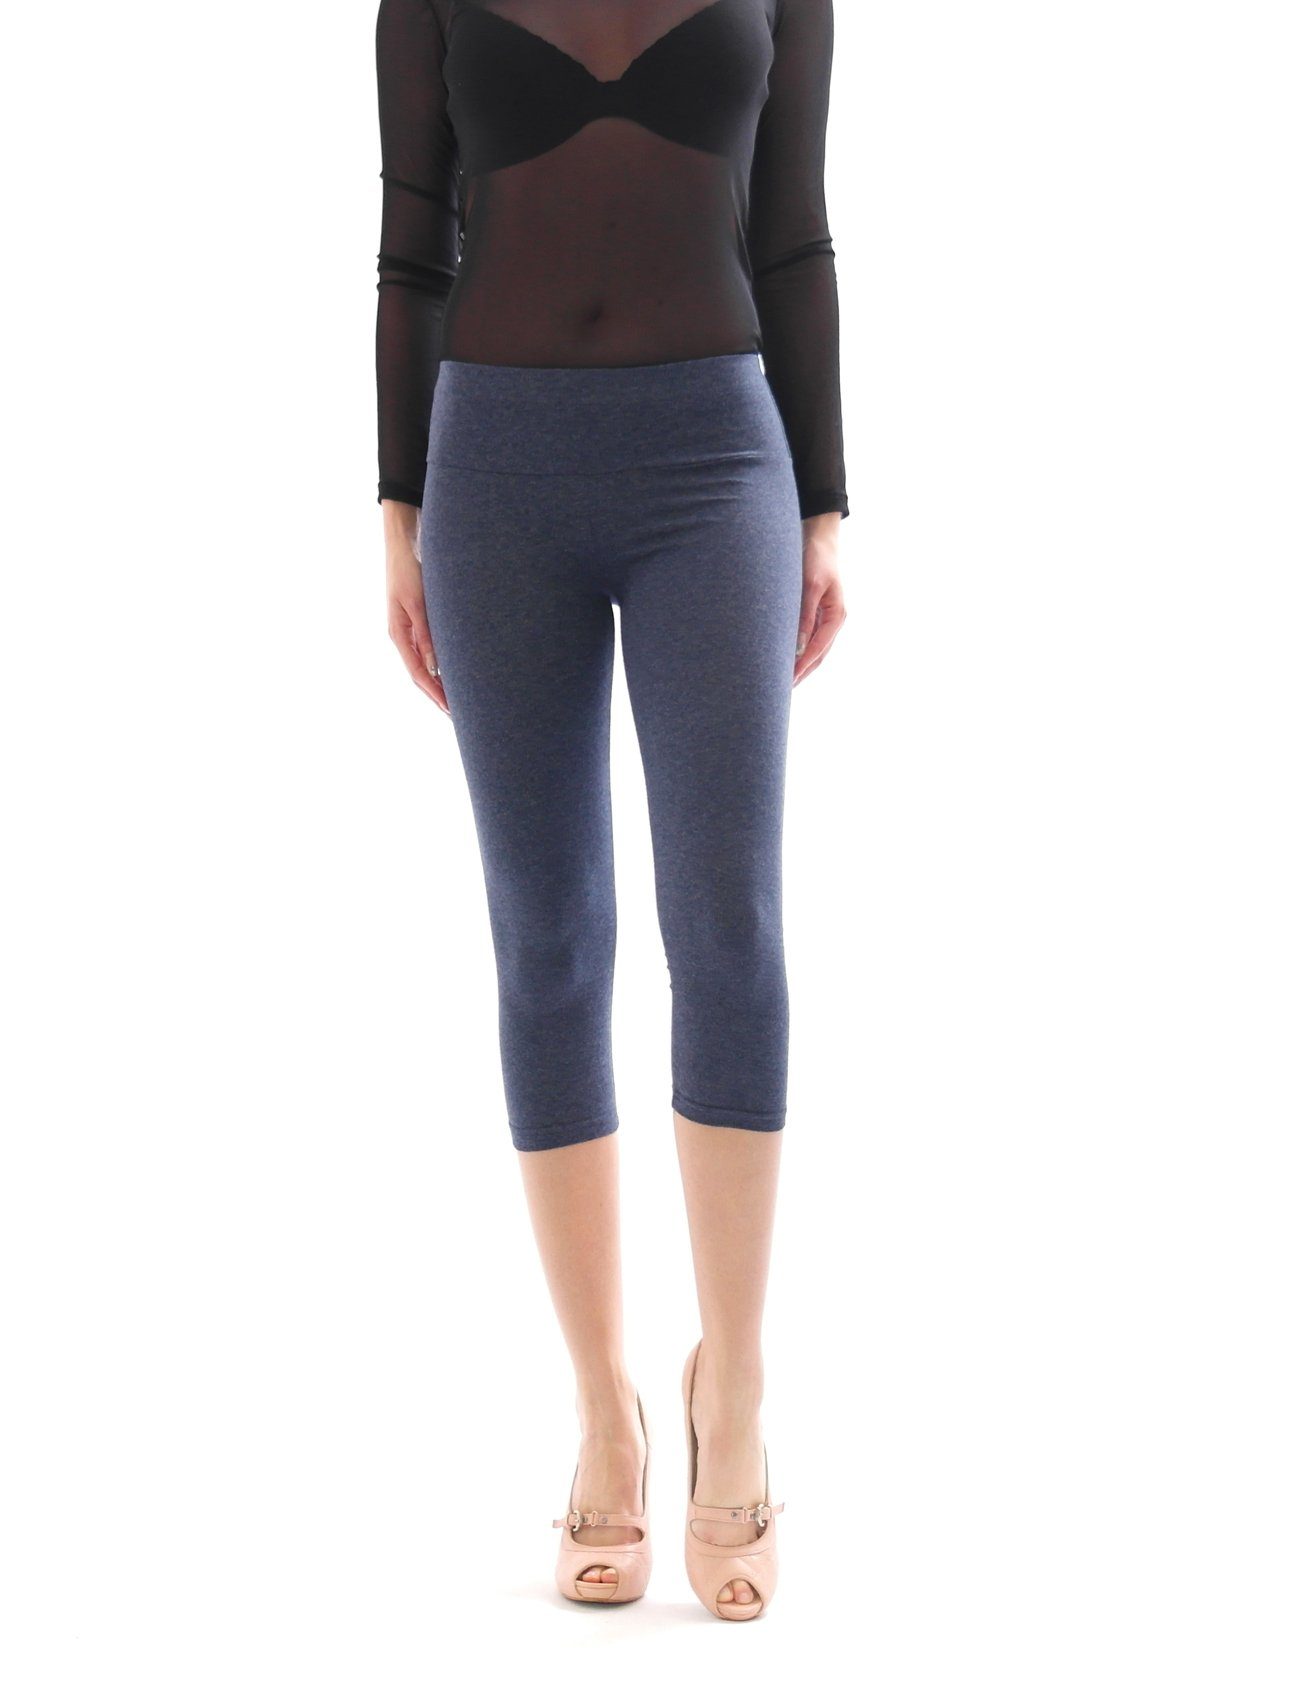 SYS Caprileggings Capri Leggings Hose 3/4 jeans hoher mit Taschen Damen Baumwolle Leggins Bund